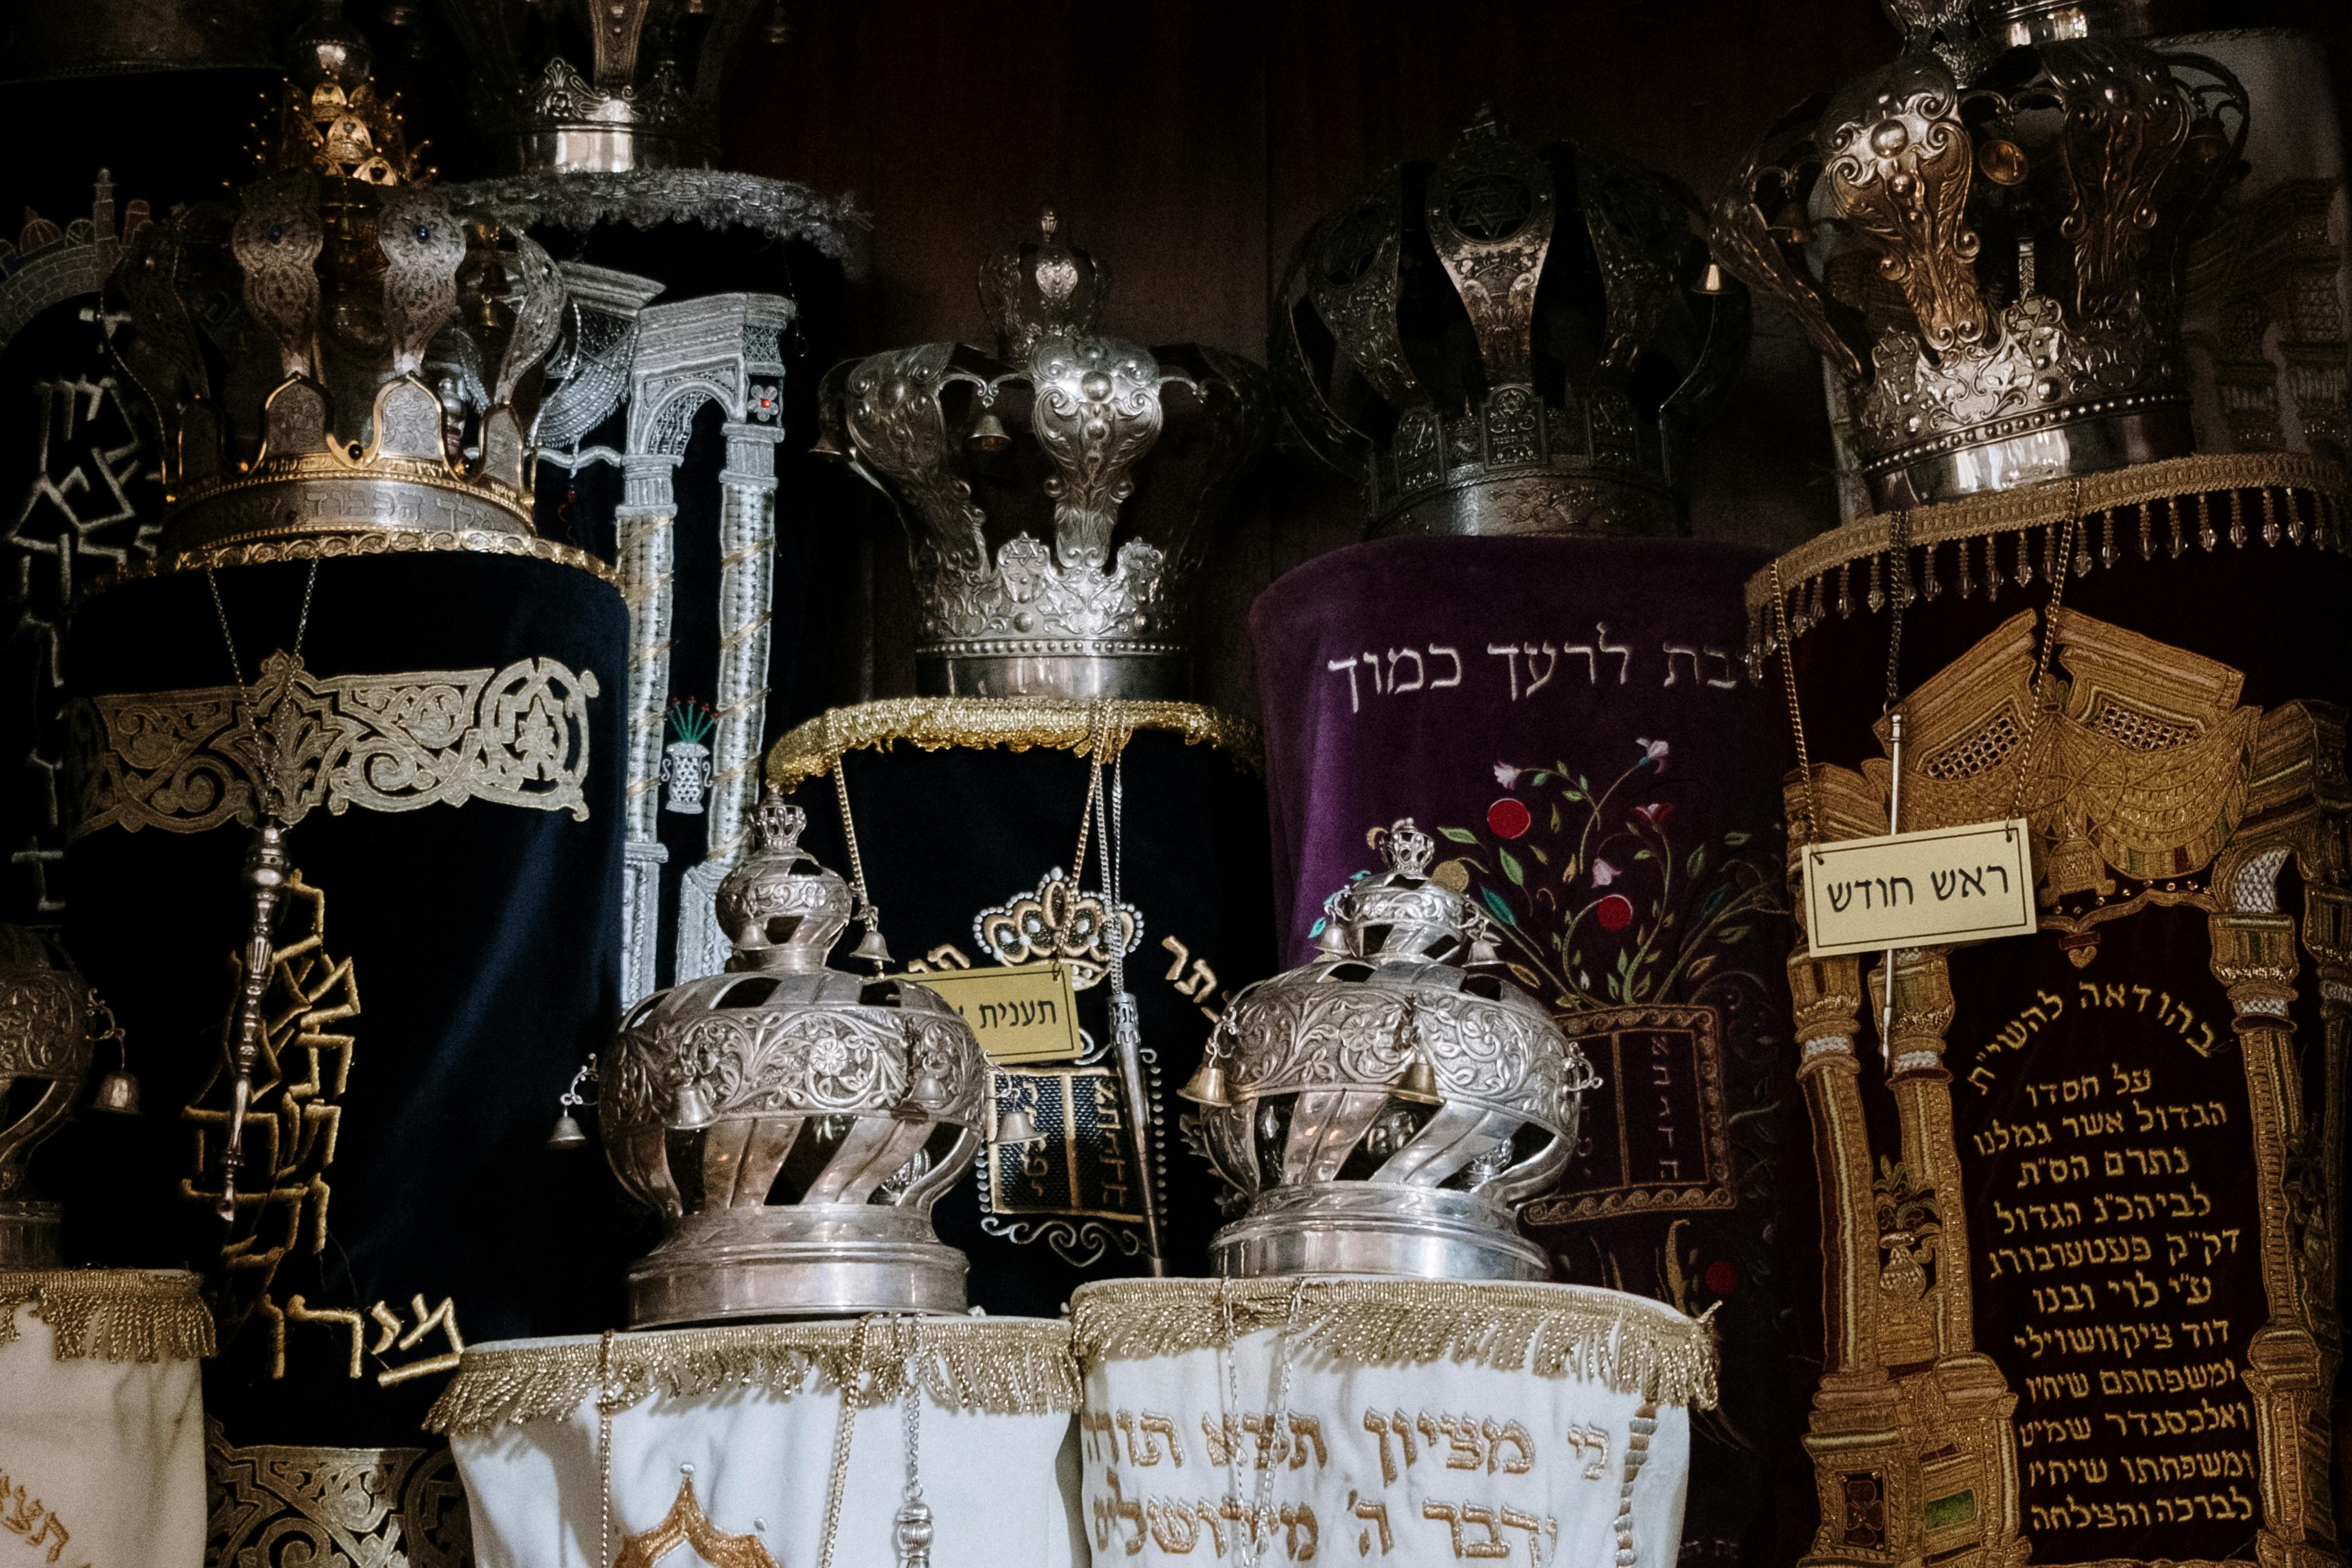 Image Torah scroll - free printable images - Img 26212.